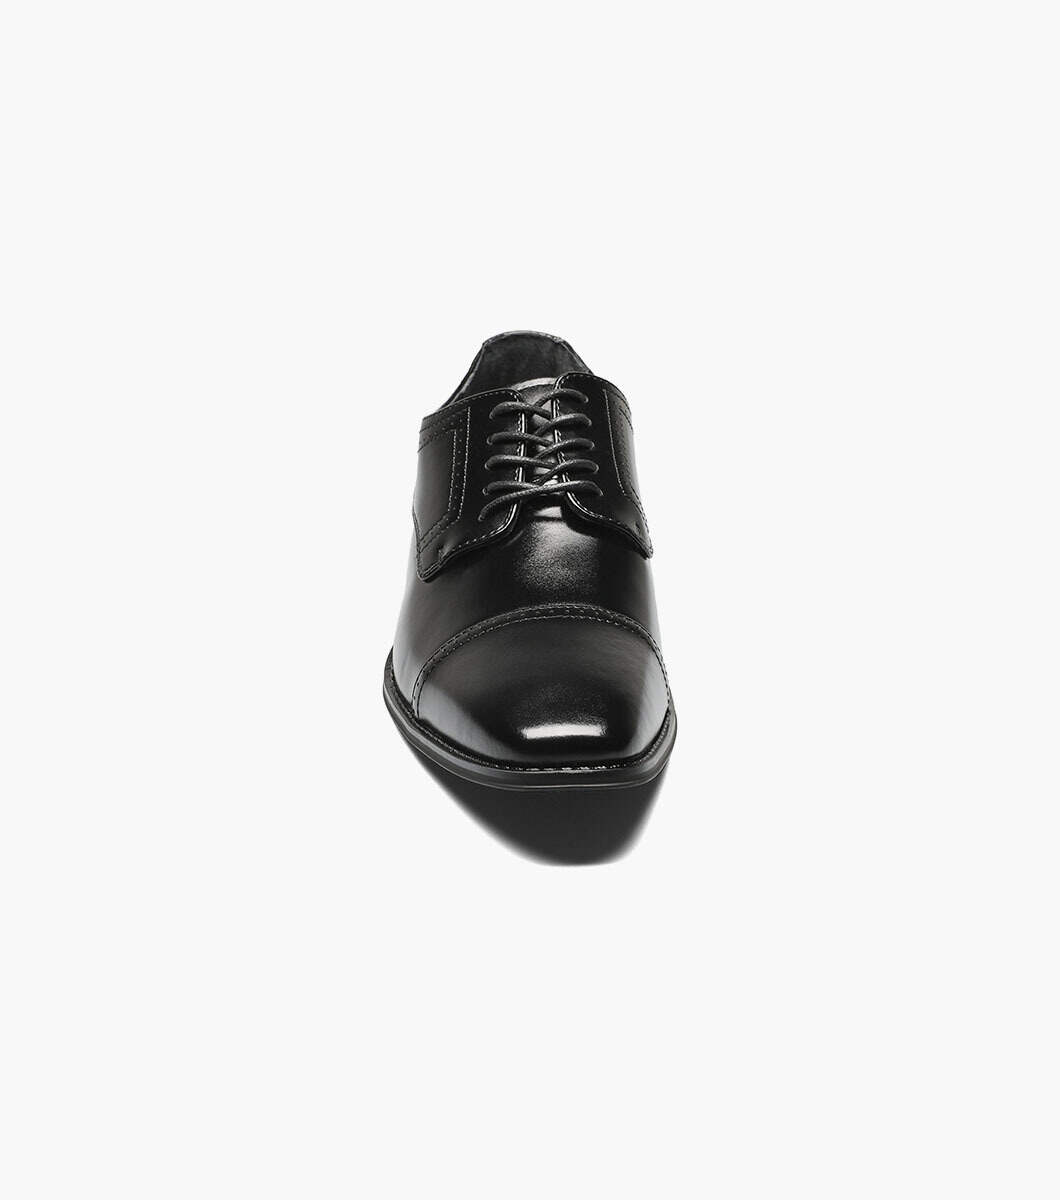 Details about   Stacy Adams Men's Shoes Waltham Cap Toe Oxford White 20138-100 